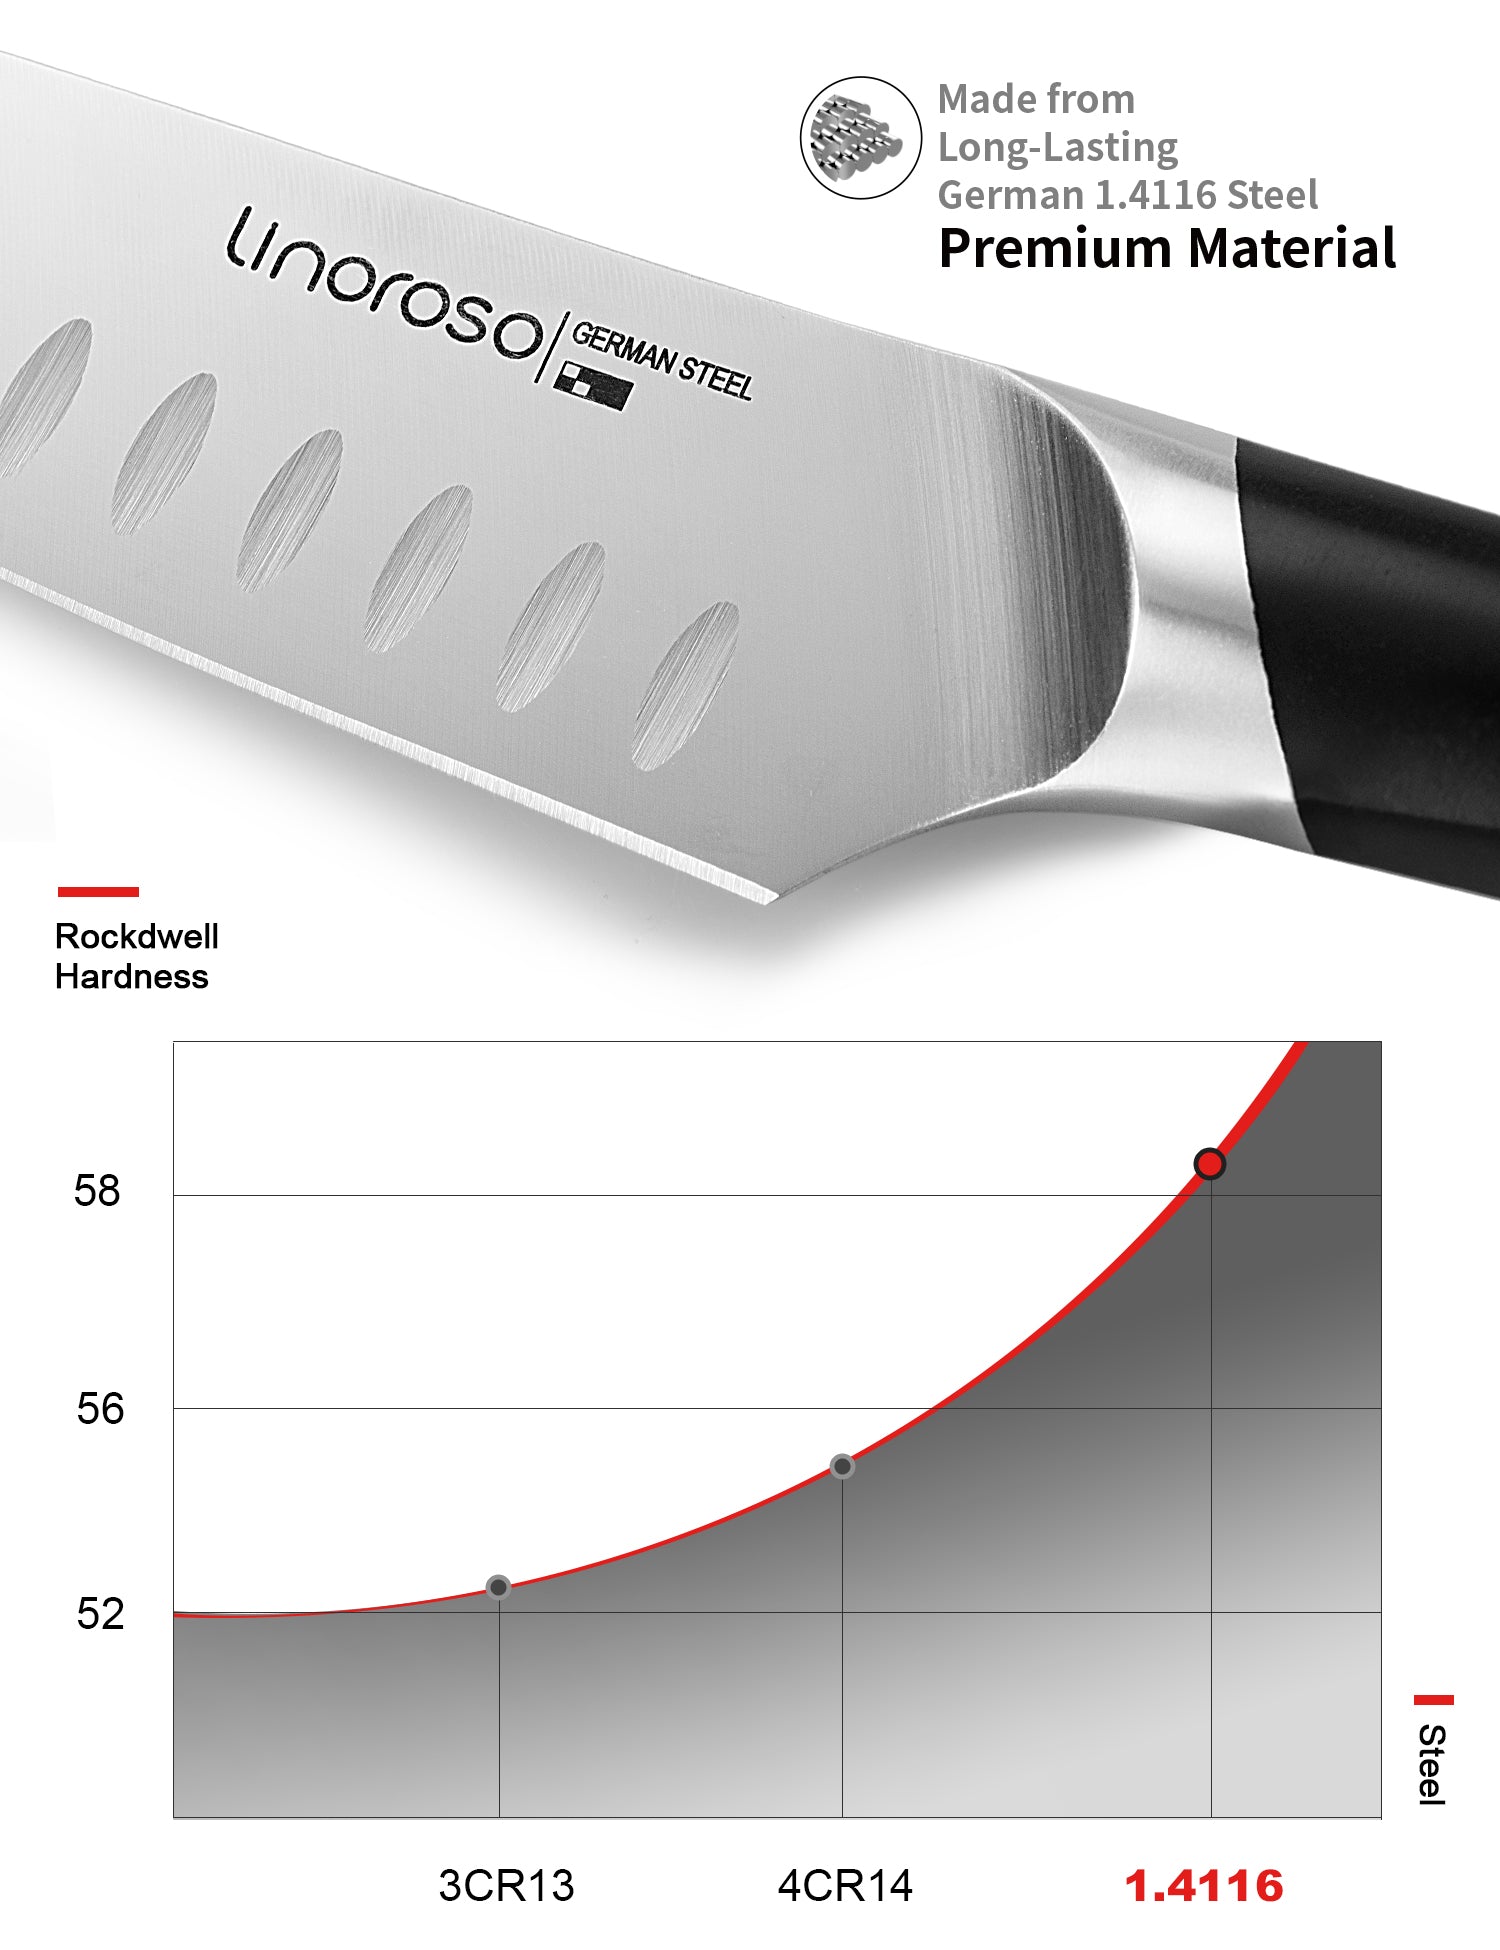 Linoroso 8 inch Bread Knife - MAKO Series